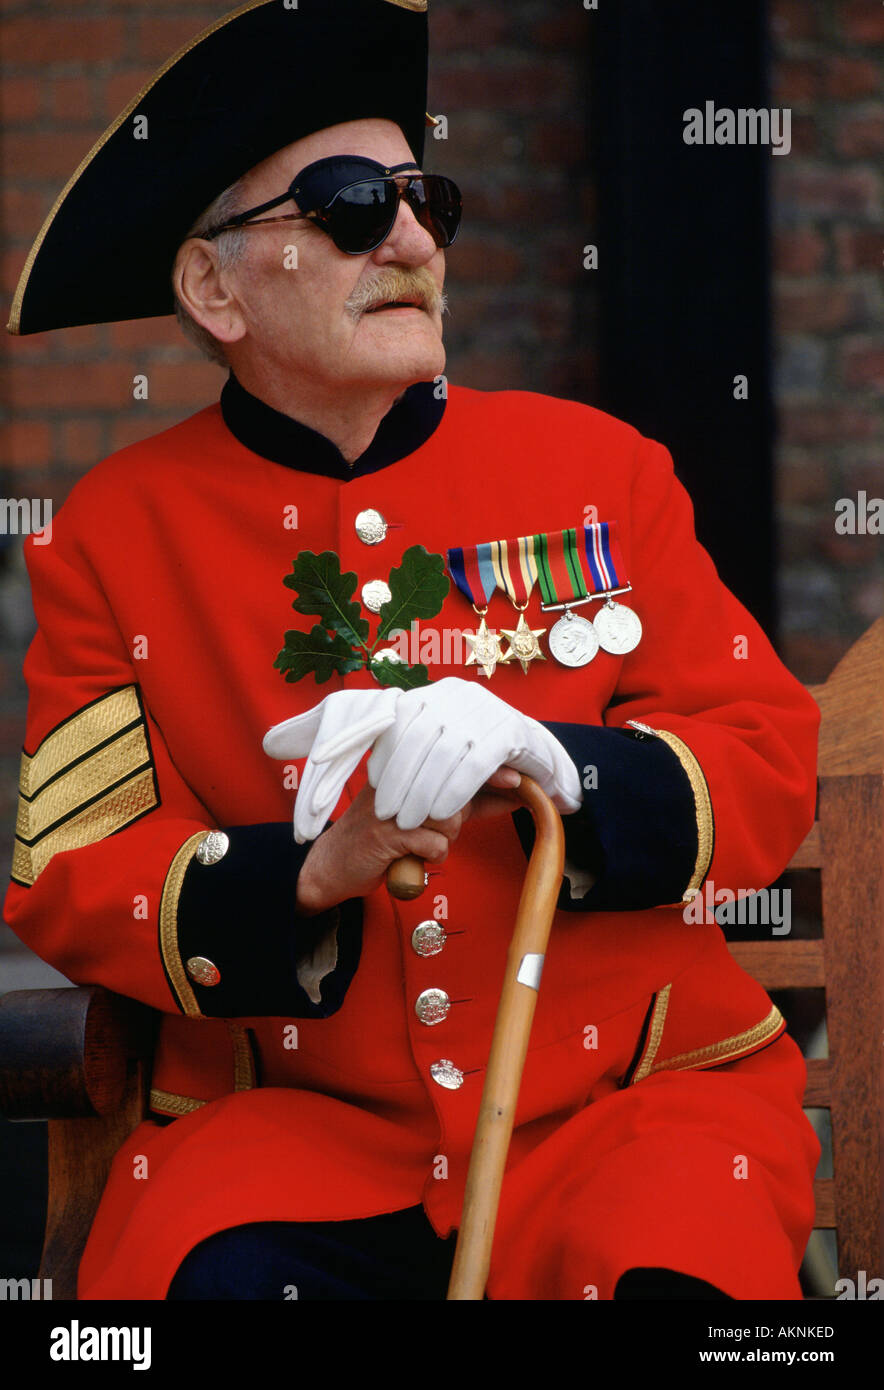 Chelsea-Pensionär im roten Mantel und Dreispitz Hut auf Gründer s Day Parade am Royal Hospital Chelsea London UK Stockfoto